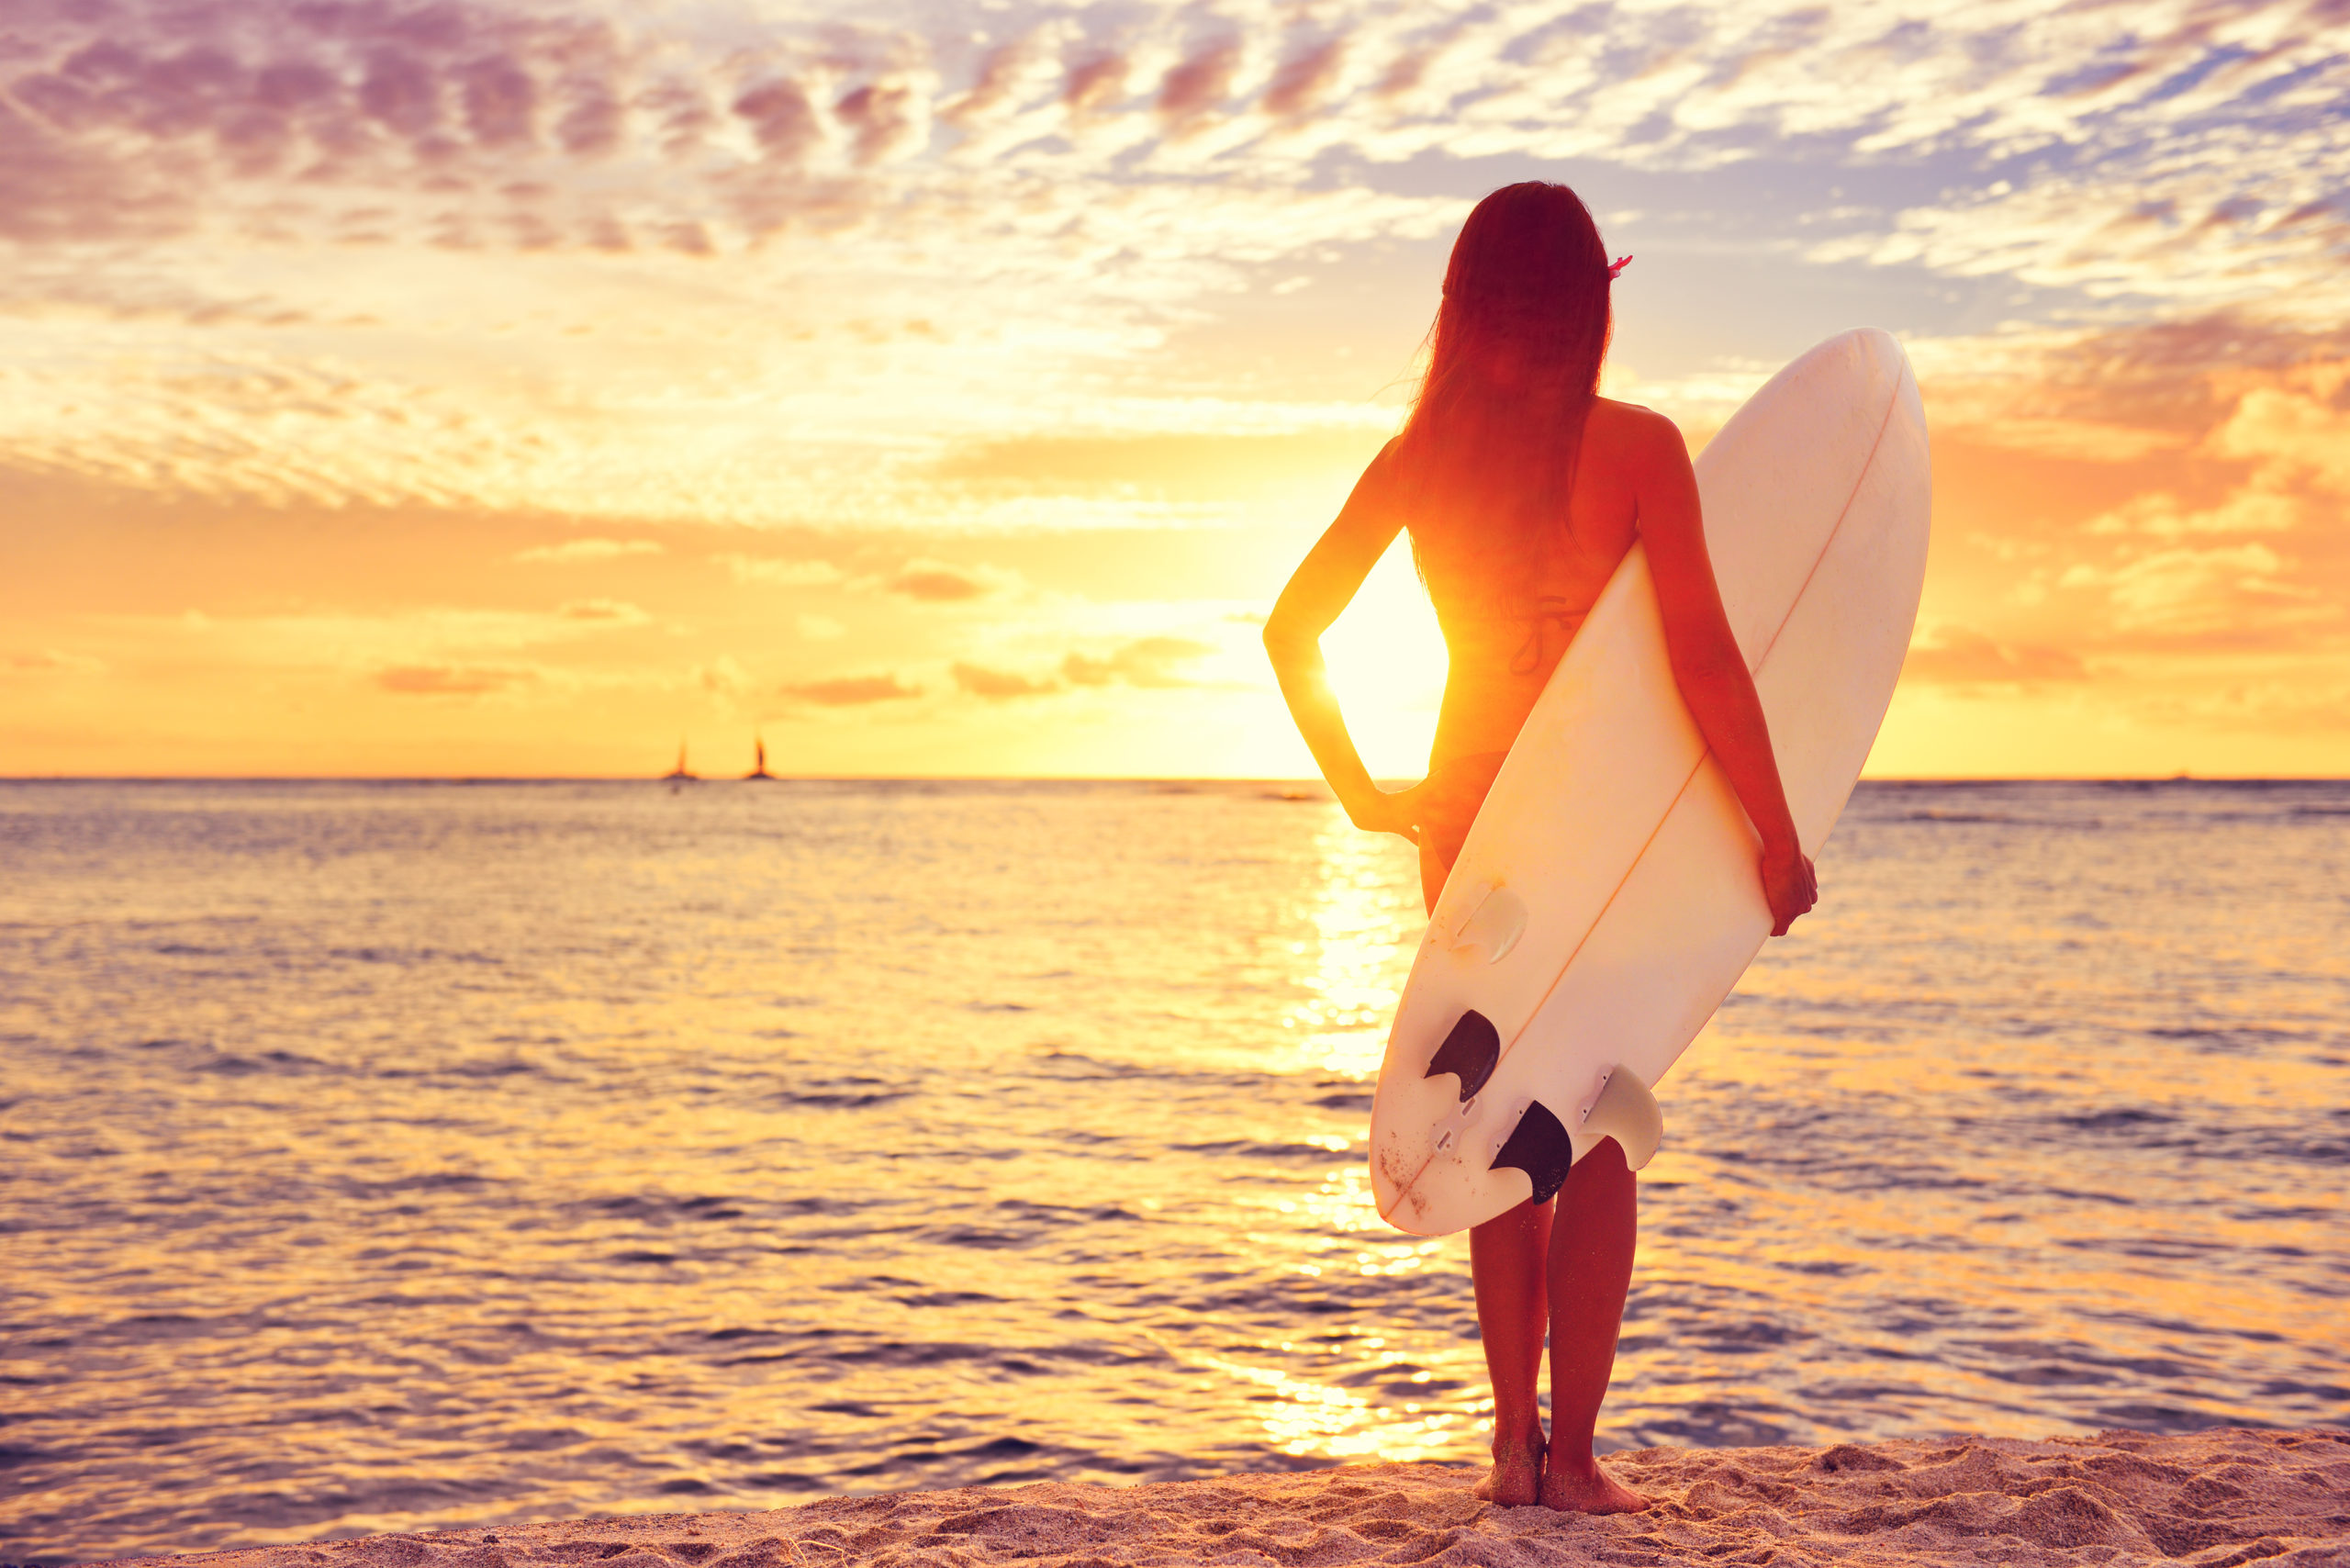 Free Images : beach, sea, ocean, horizon, person, woman, shore, wave, vacation, model, swimming ...